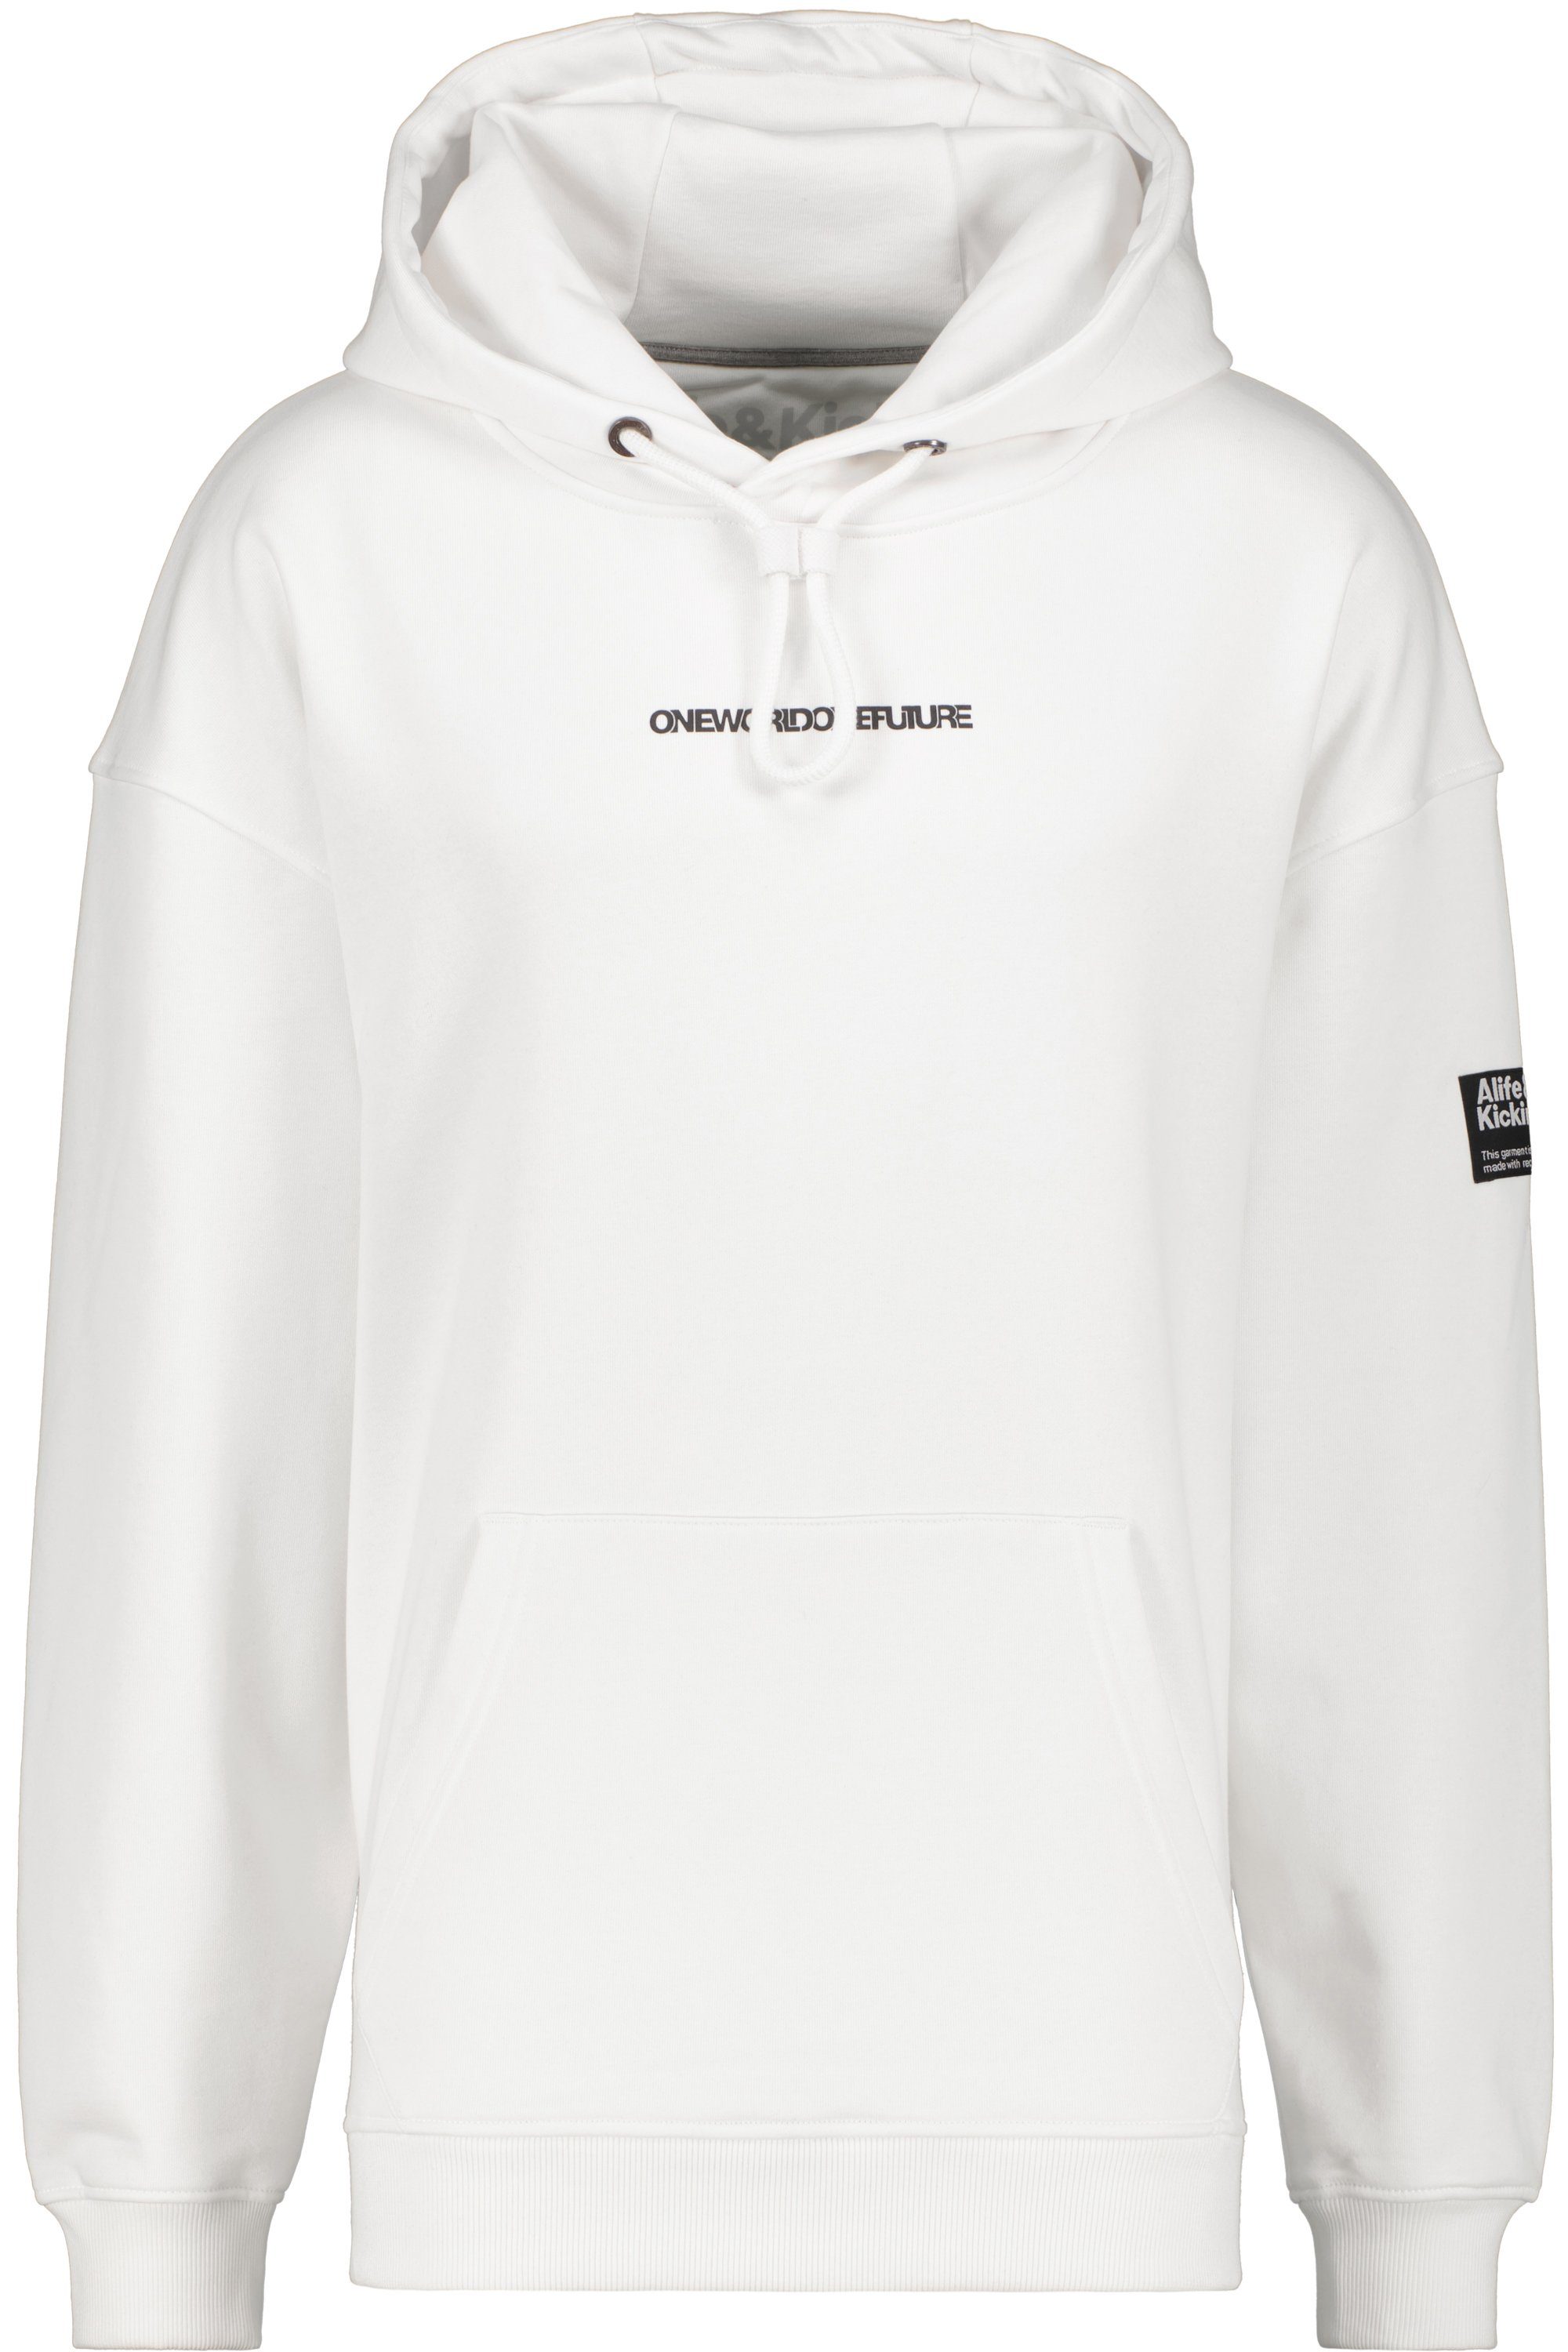 Alife Sweat YannisAK Kapuzensweatshirt Kapuzensweatshirt, Sweatshirt Herren Kickin & white